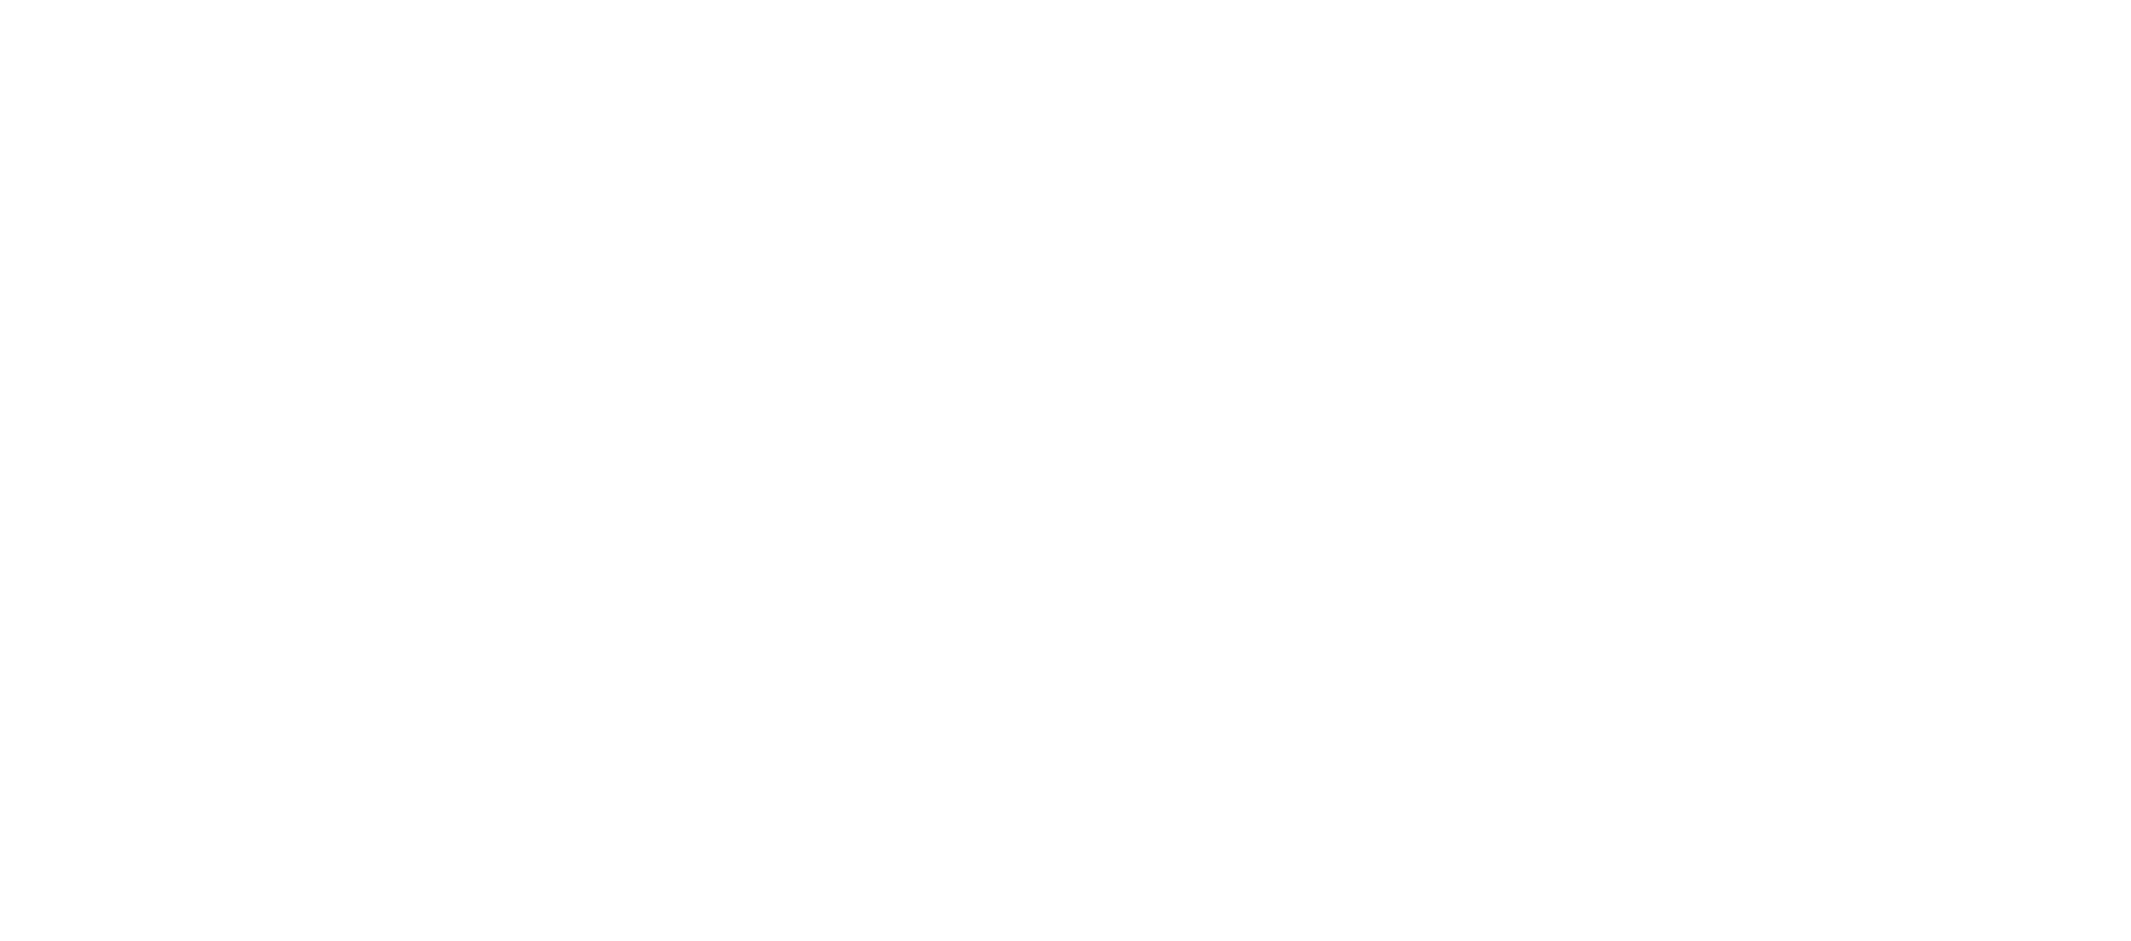 Jackson hills residential suites logo